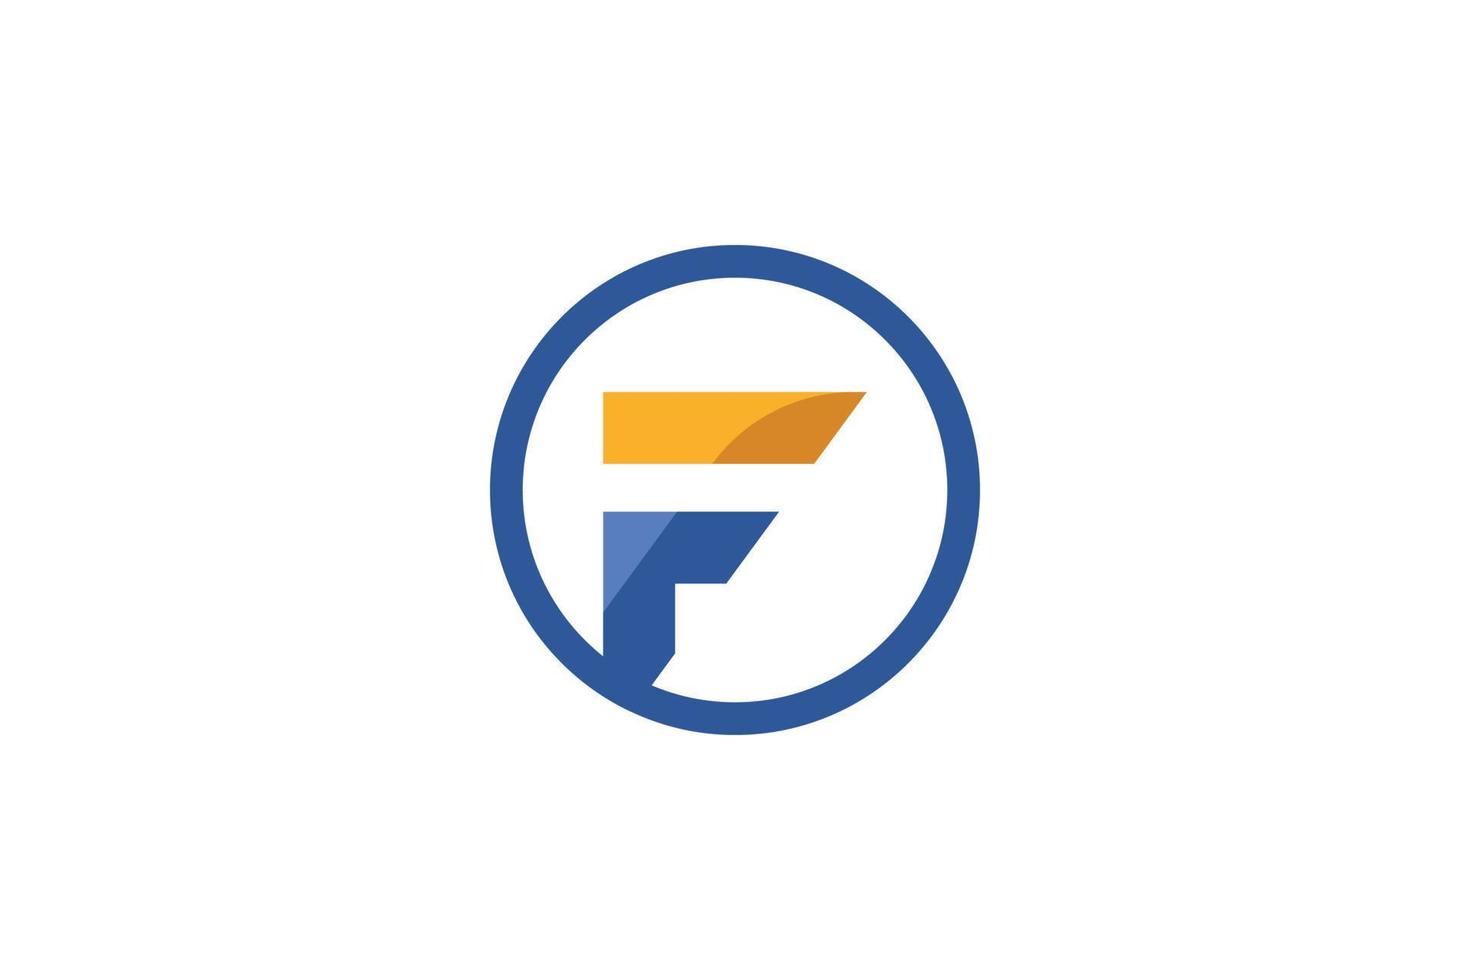 brief f logo abstract vector